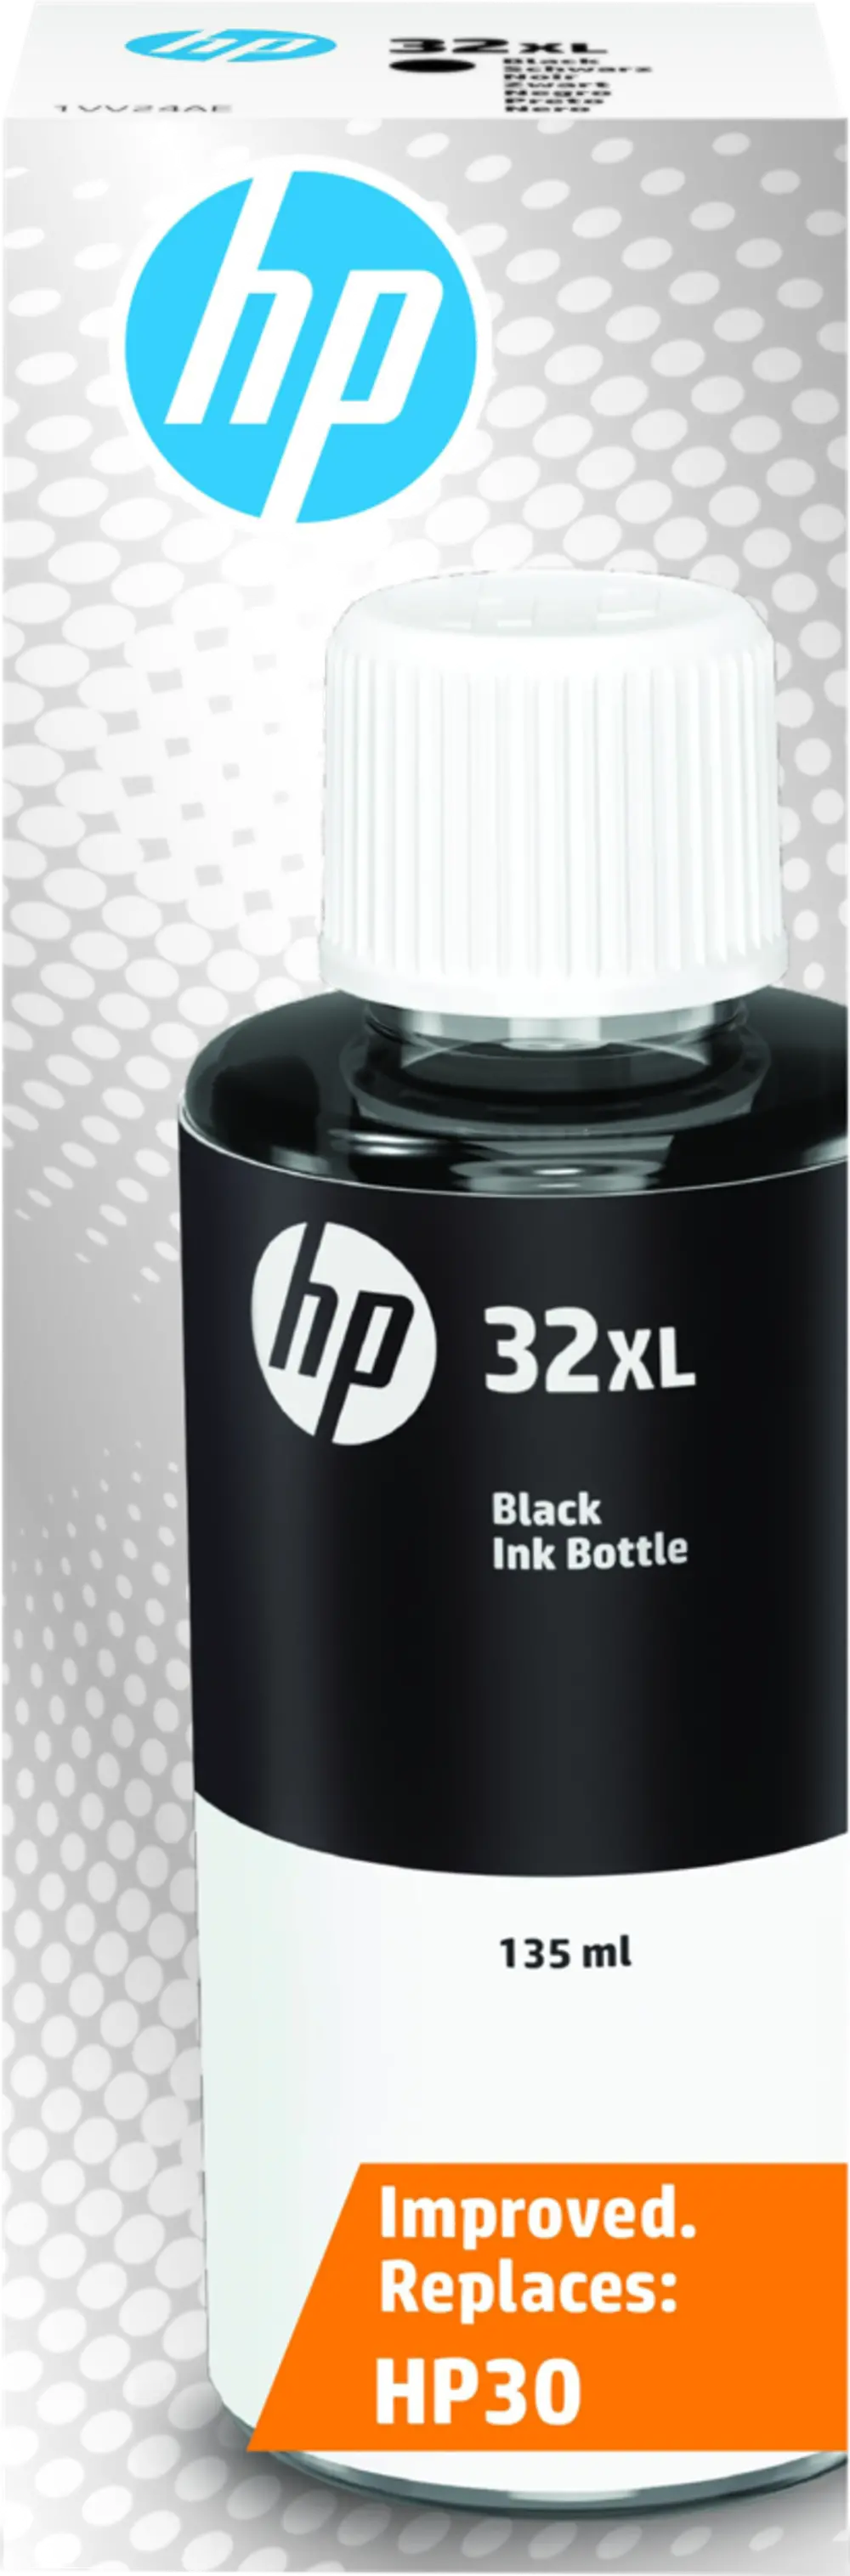 HPI-1VV24AN HP 32XL Black Original Ink Refill Bottle-1